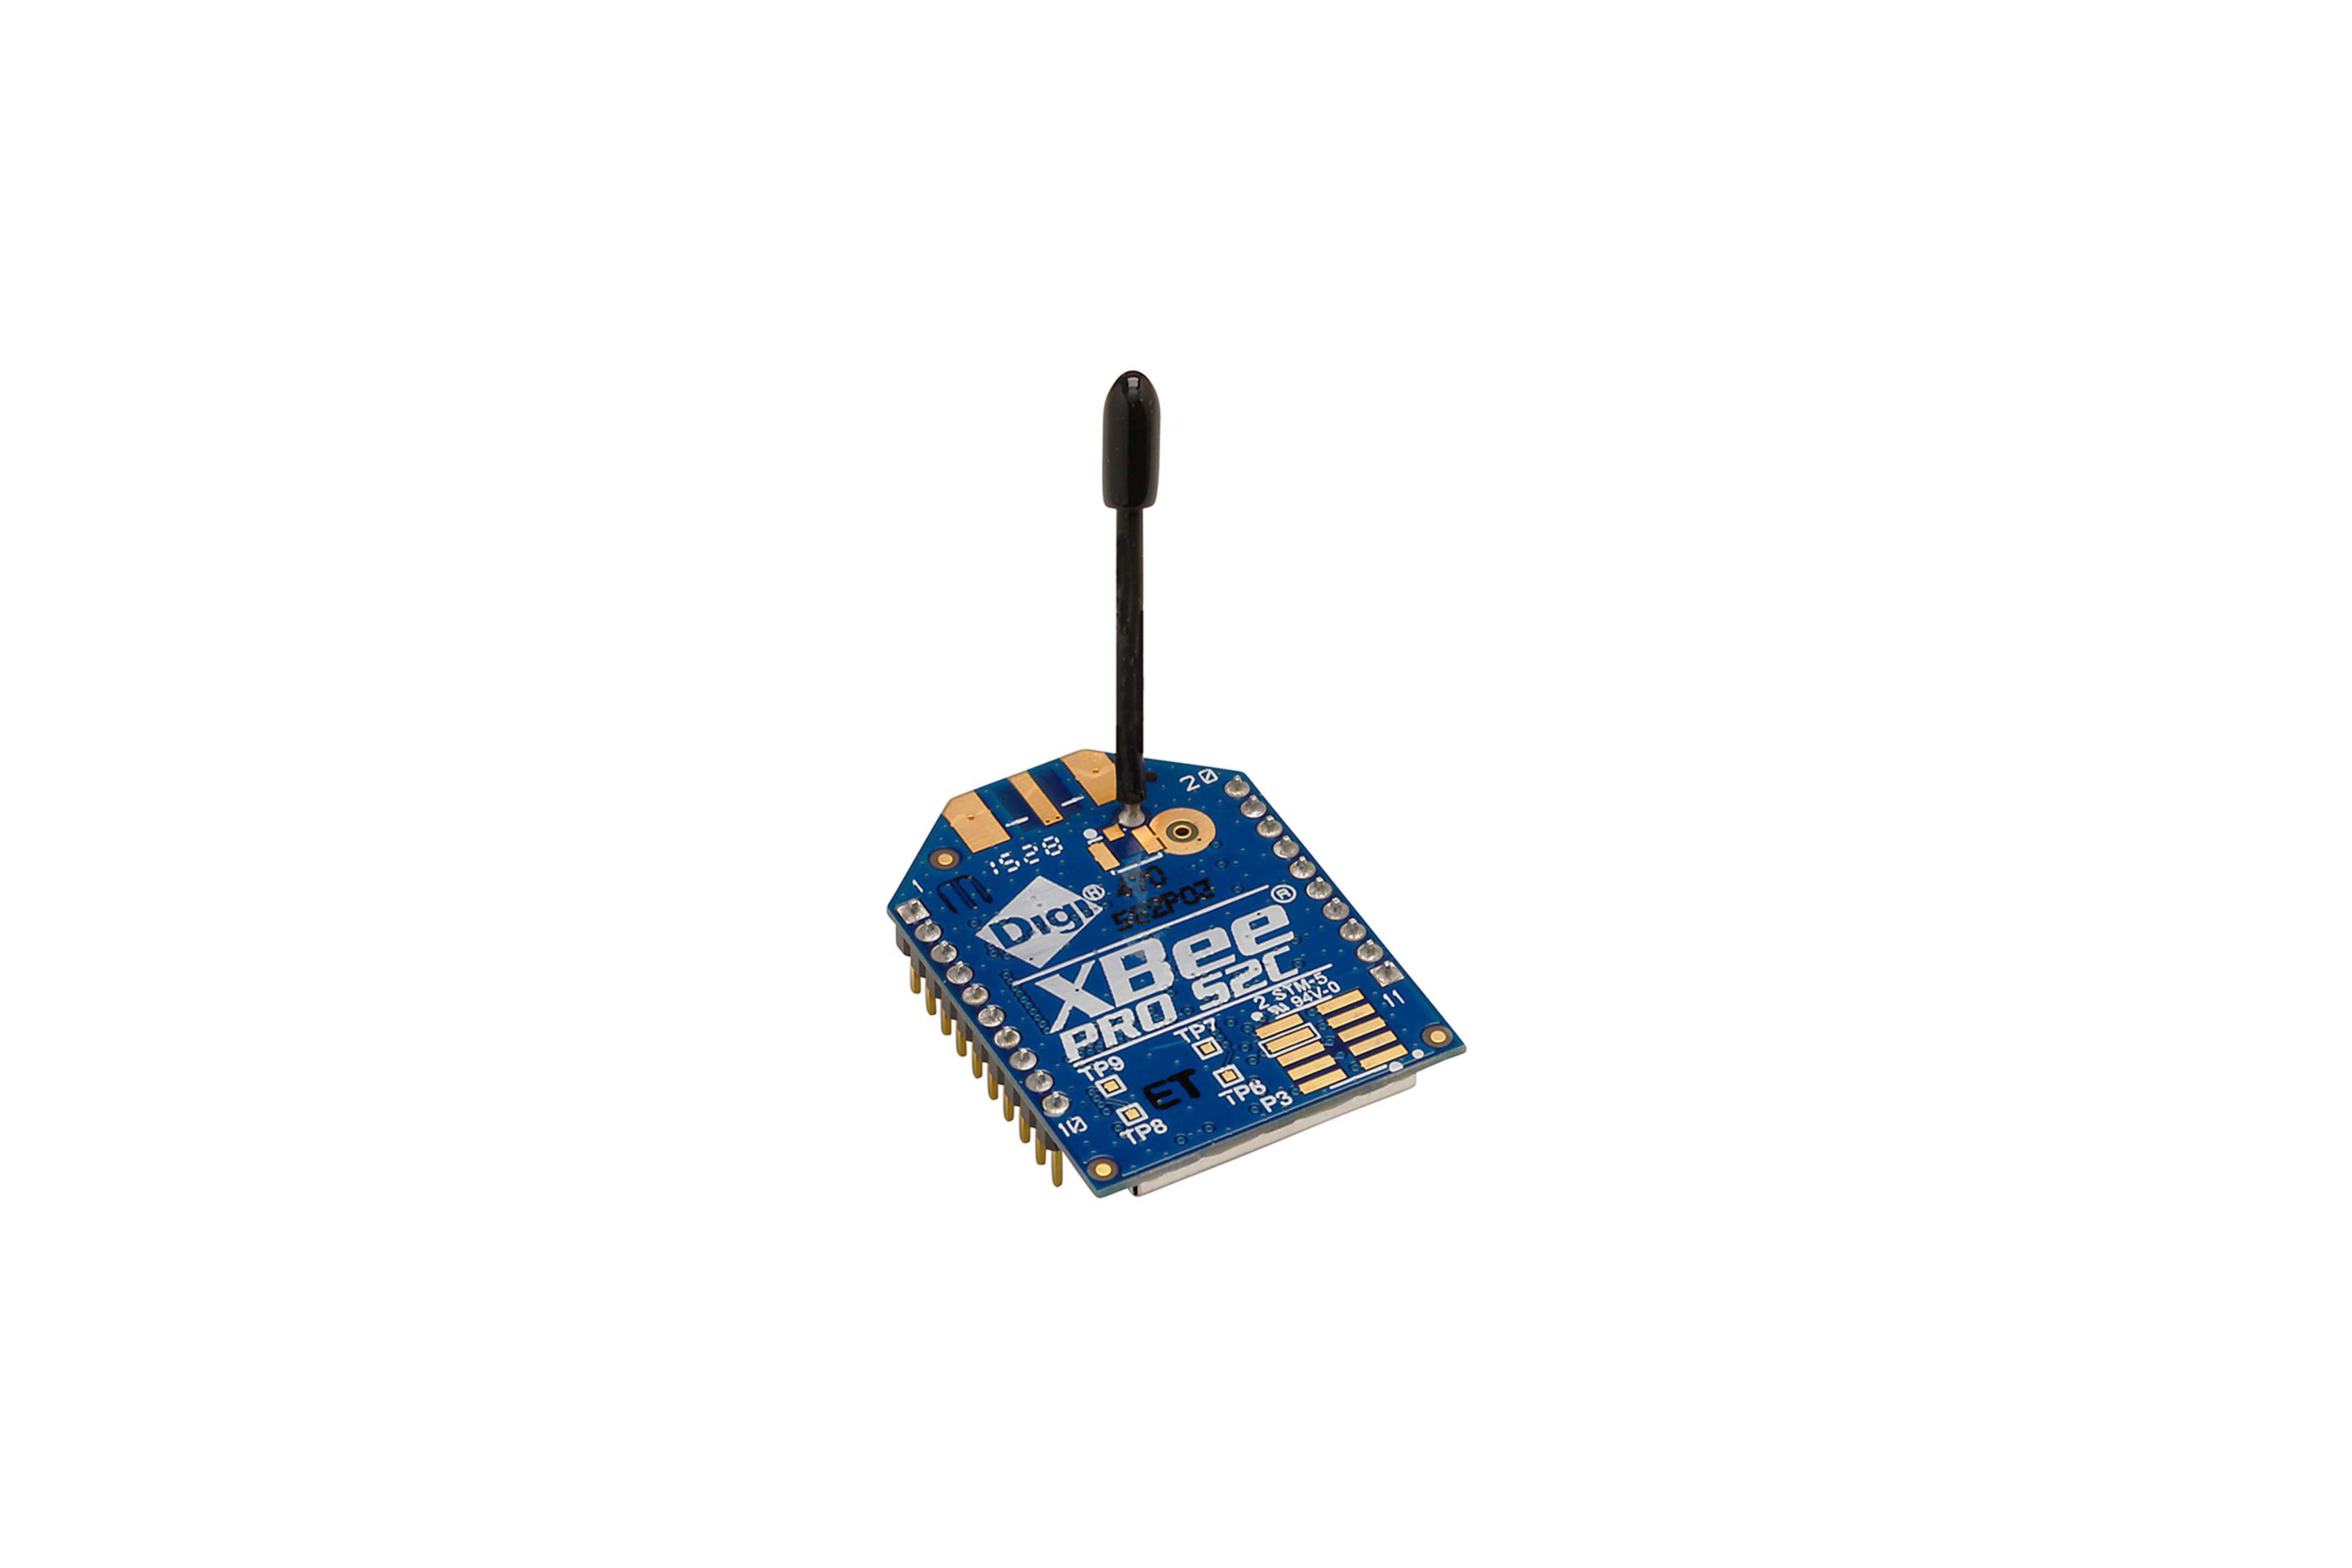 XBee-PRO S2C 802.15.4, 2.4 GHz, TH